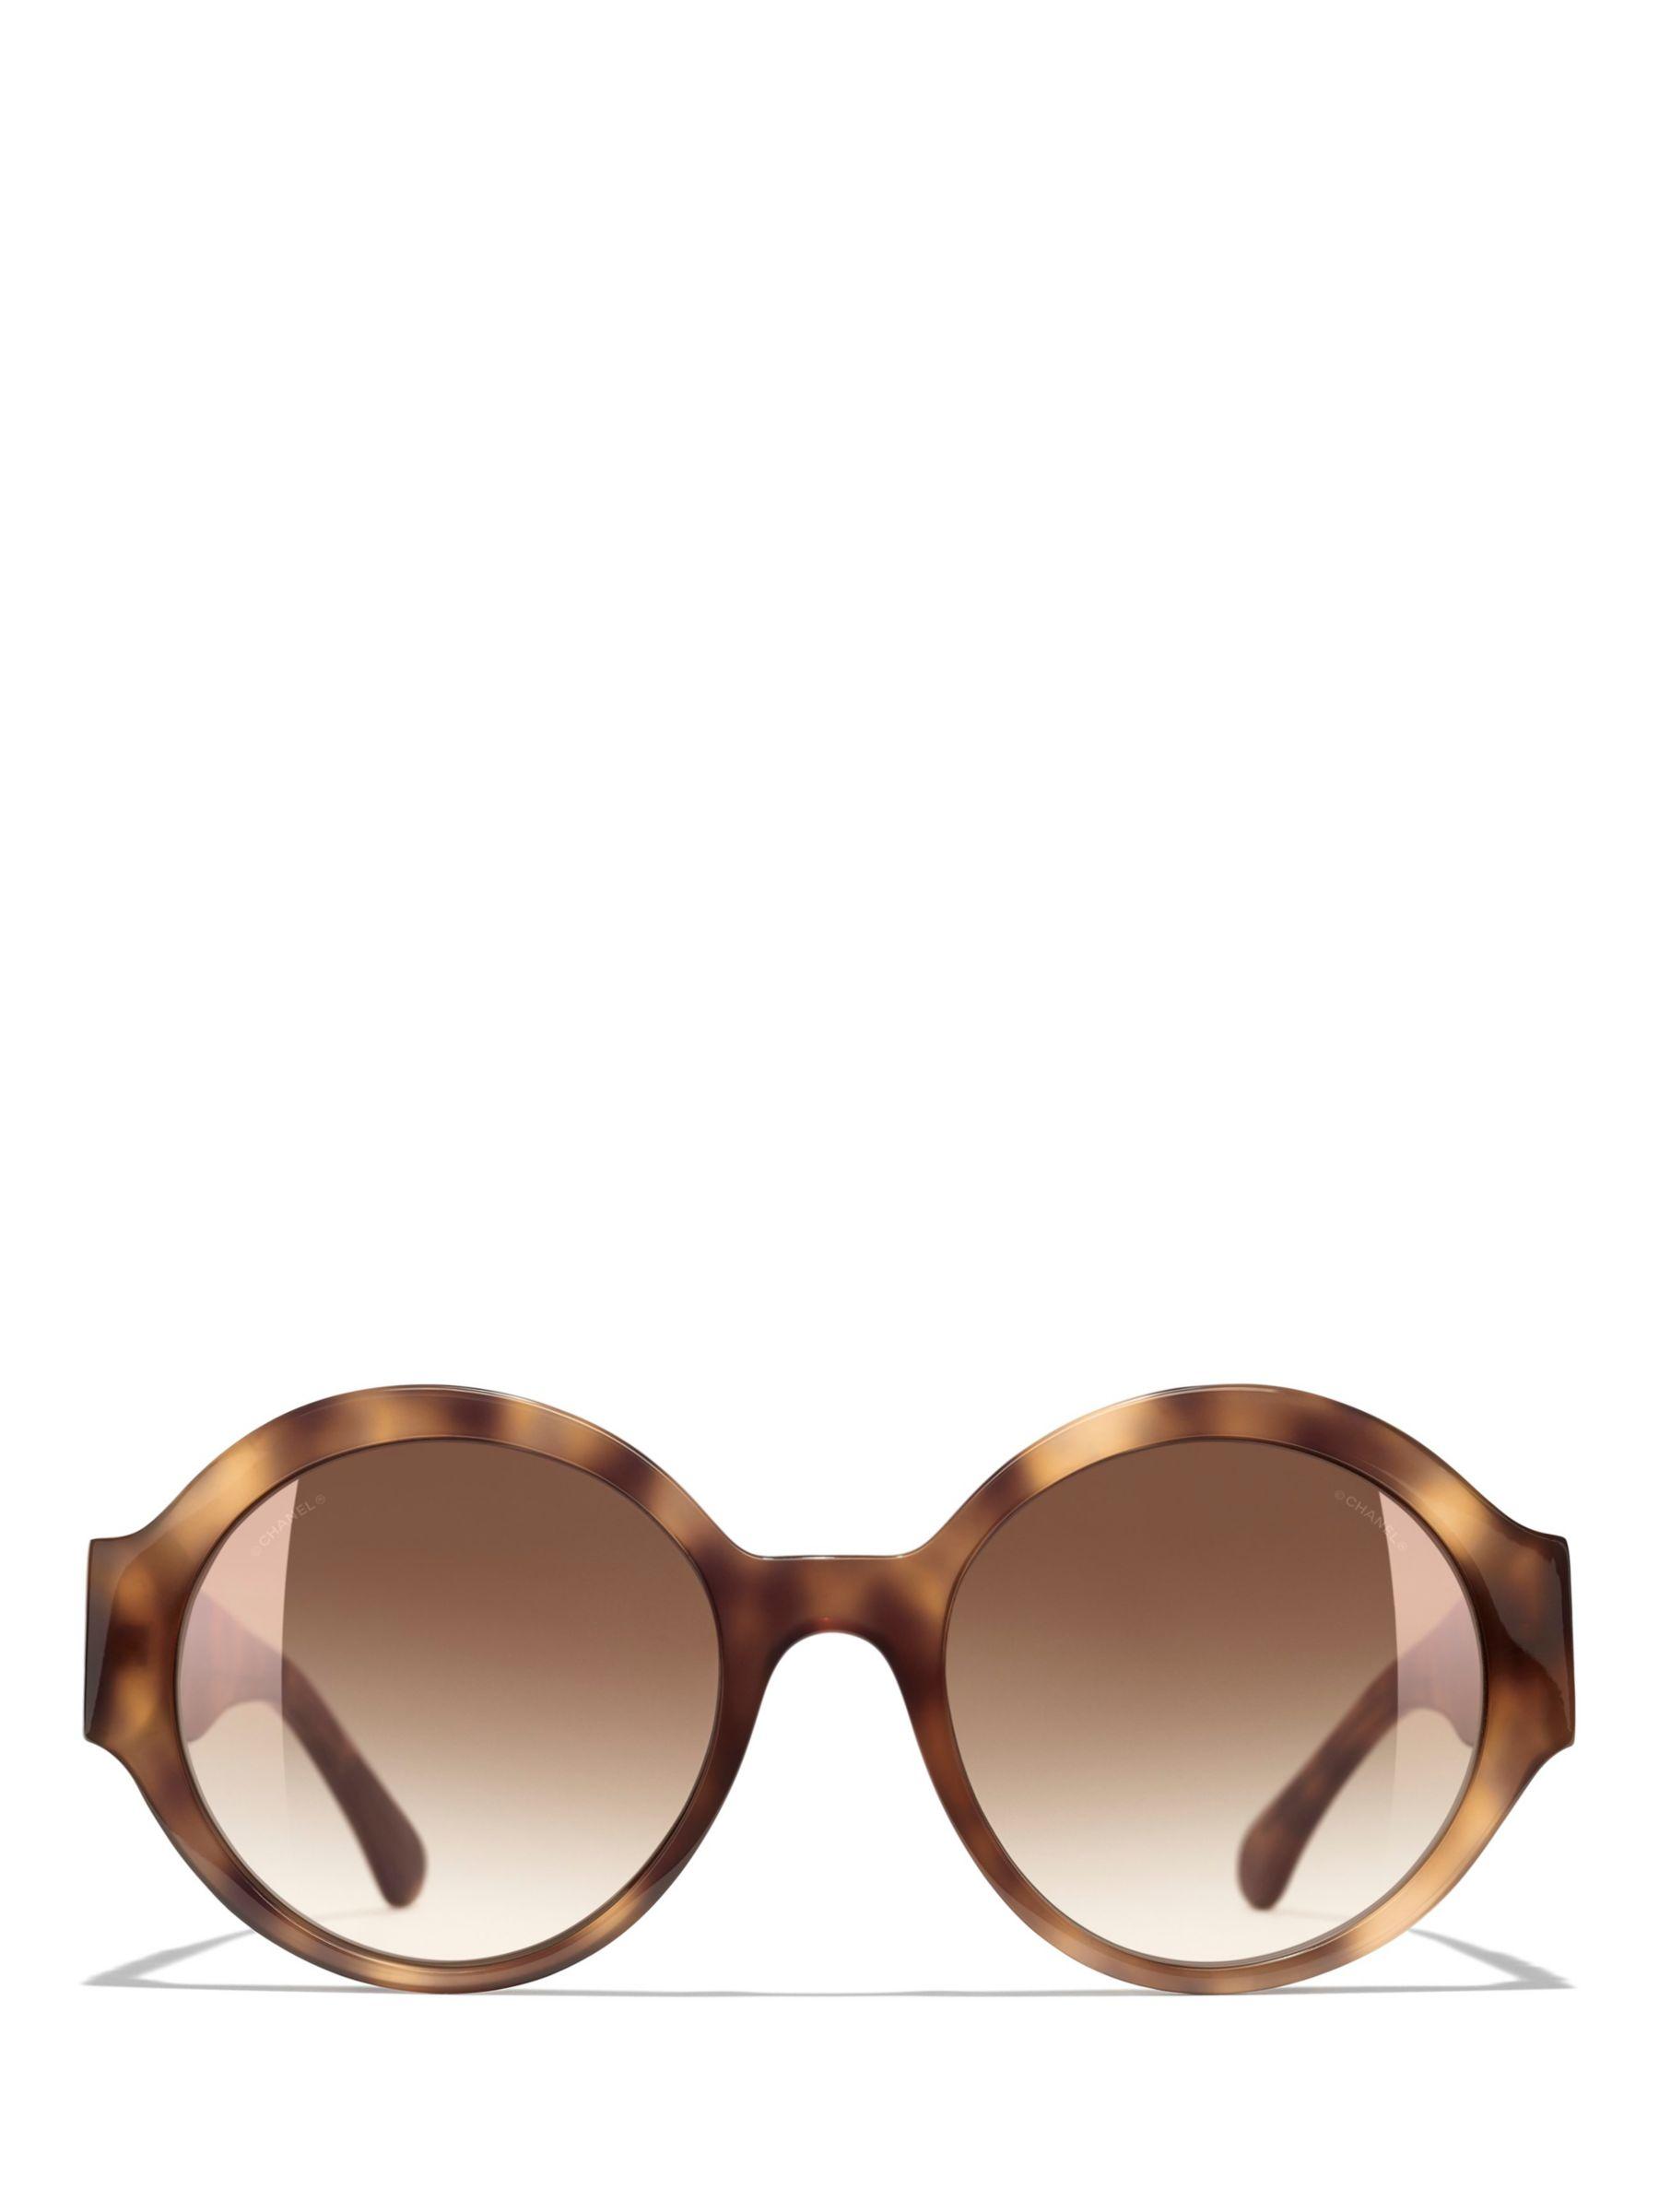 Chanel Oval Sunglasses Ch5410 Havana/brown Gradient in Pink